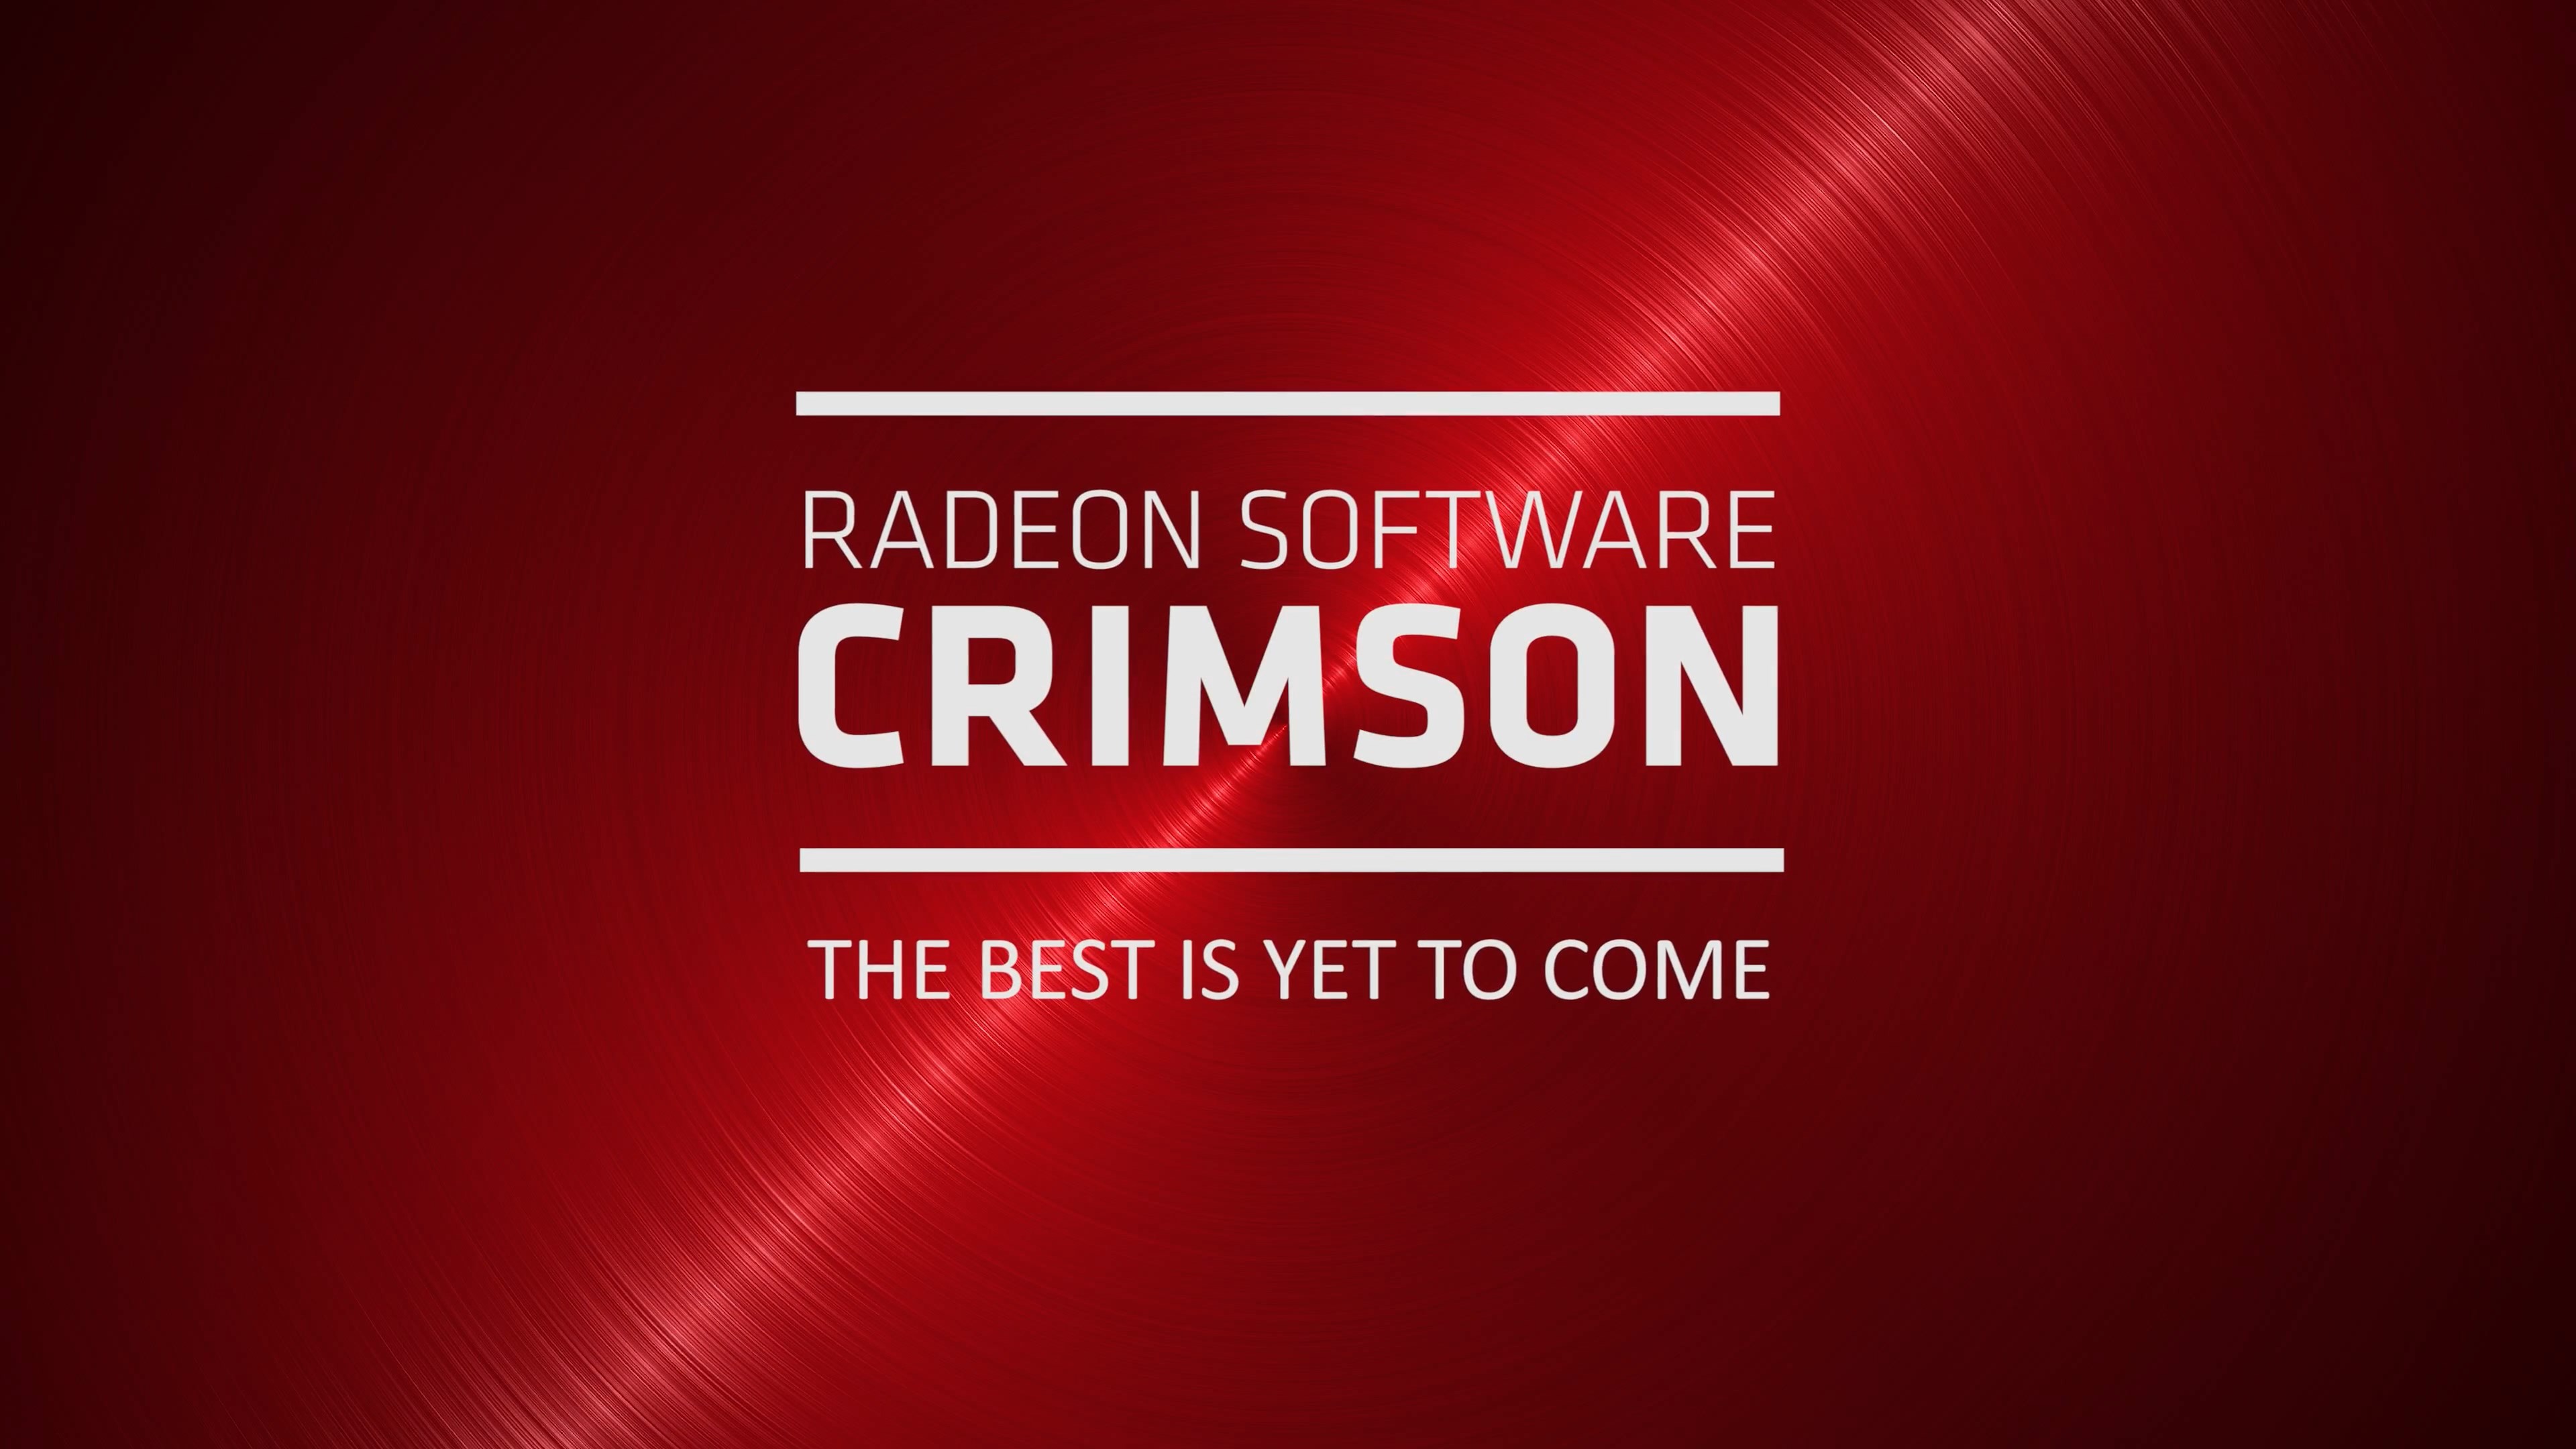 RIP AMD Catalyst, welcome Radeon Software : Crimson Edition 38